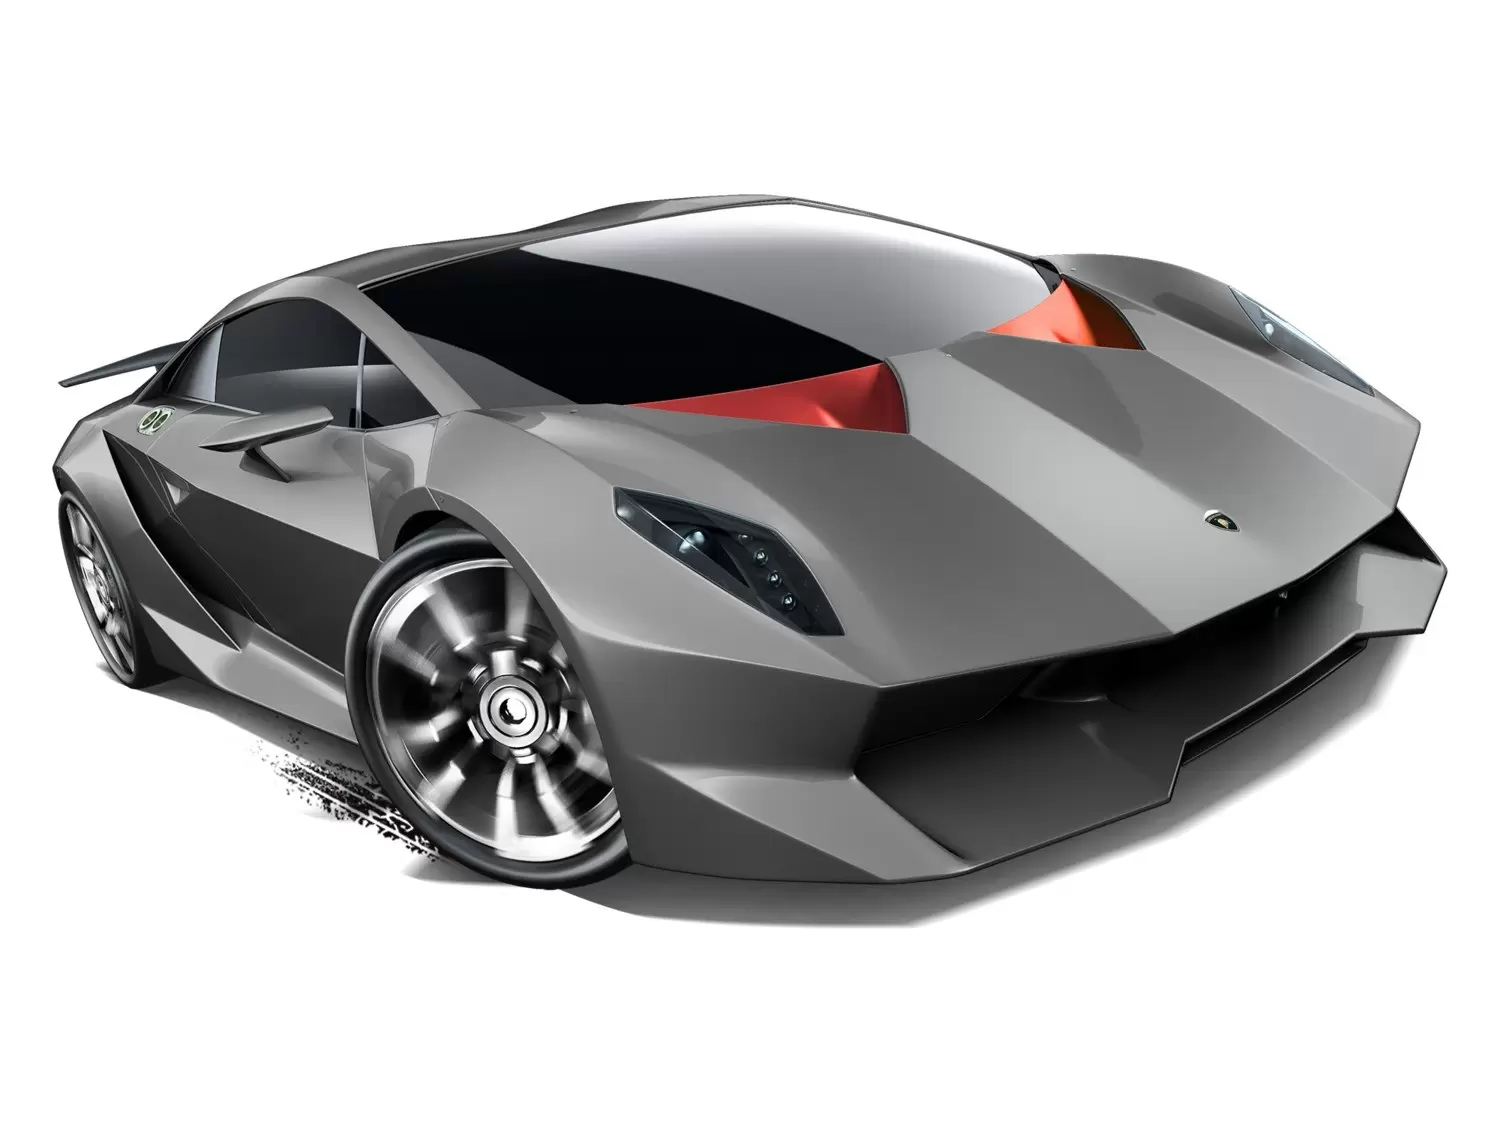 Hot Wheels Classiques - Lamborghini Sesto Elemento